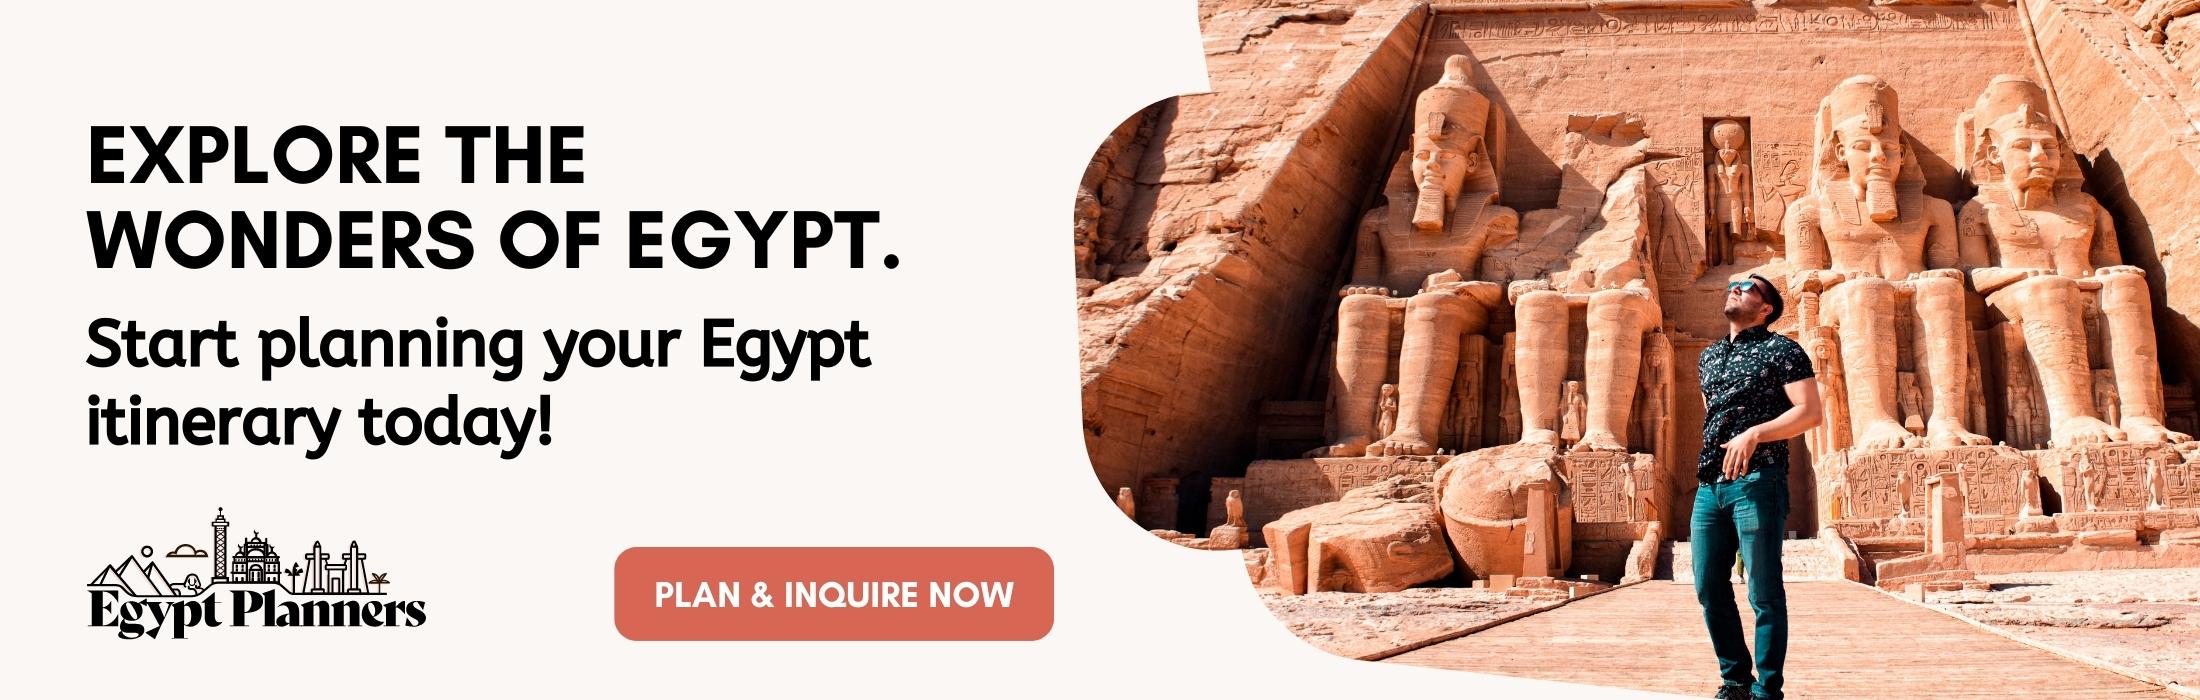 famous tourist spot in egypt